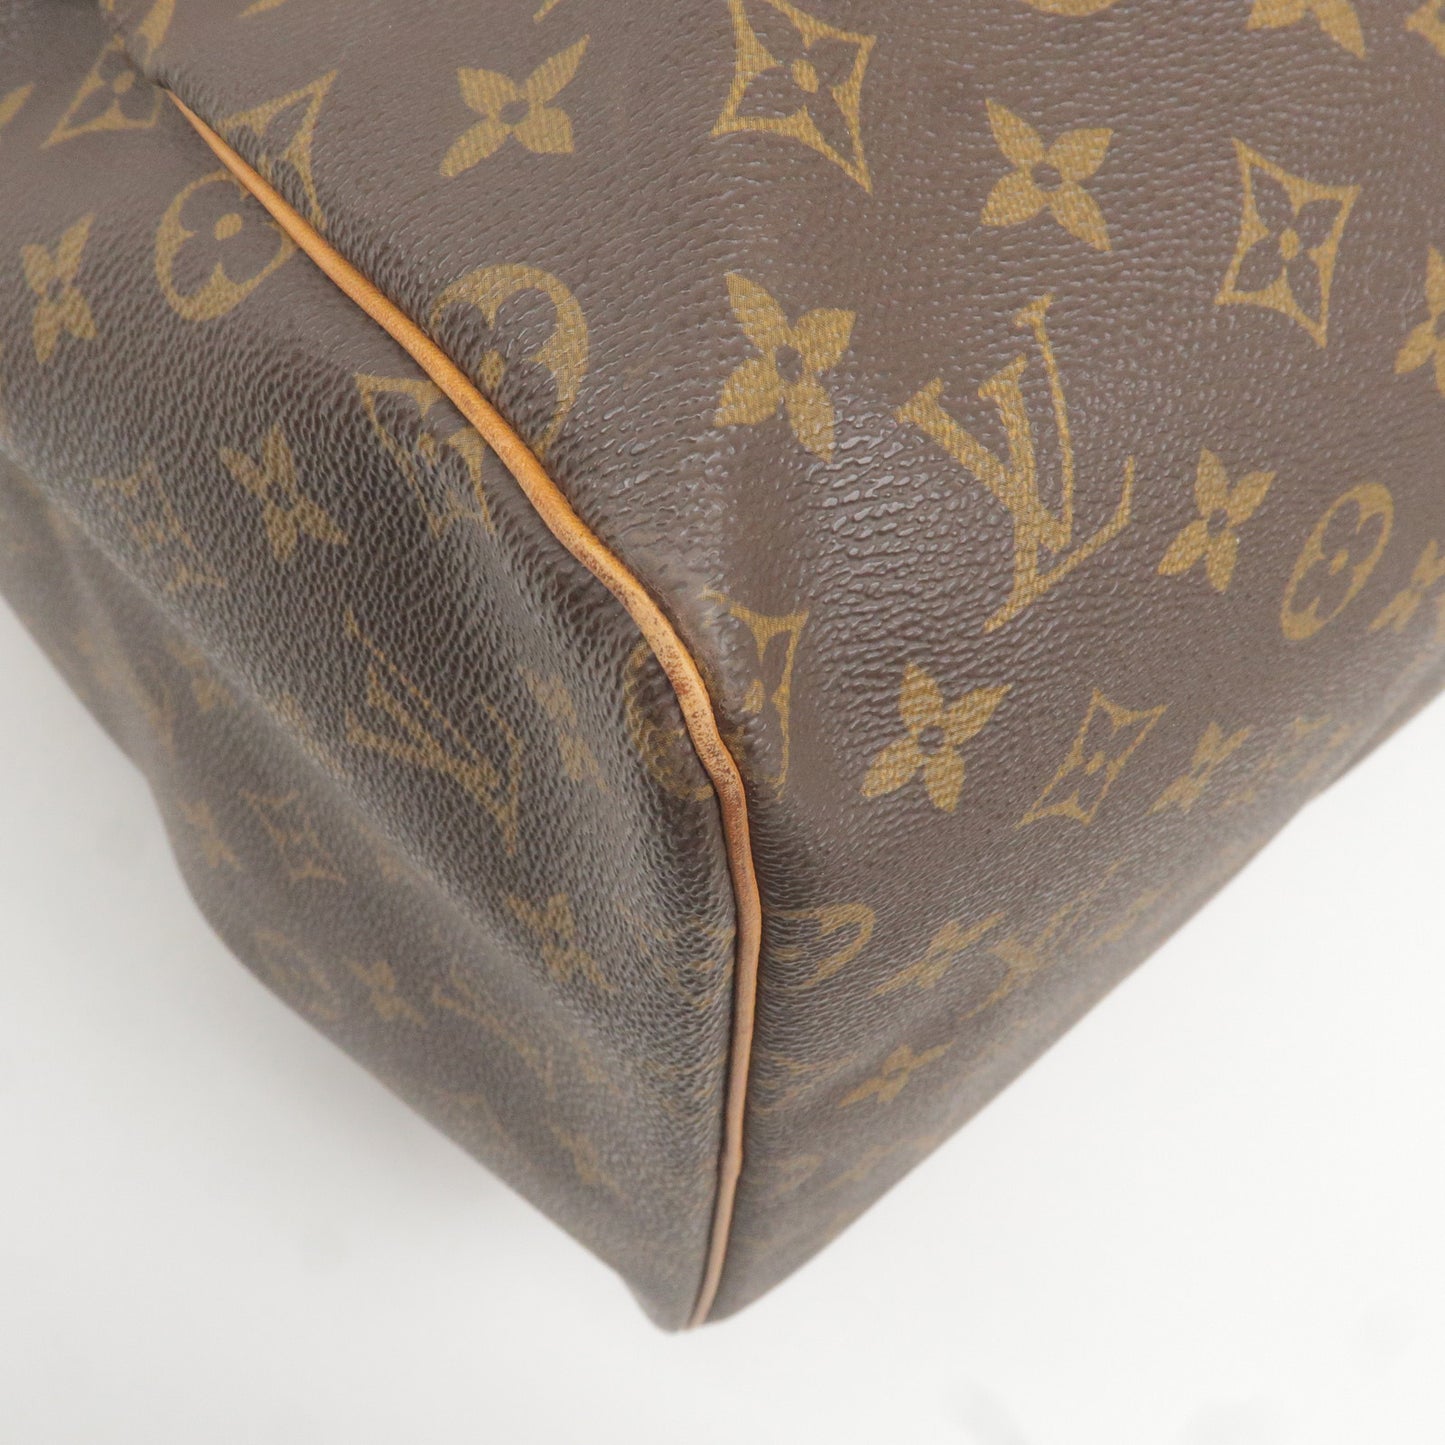 Louis Vuitton Monogram Keep All 55 Boston Bag M41424